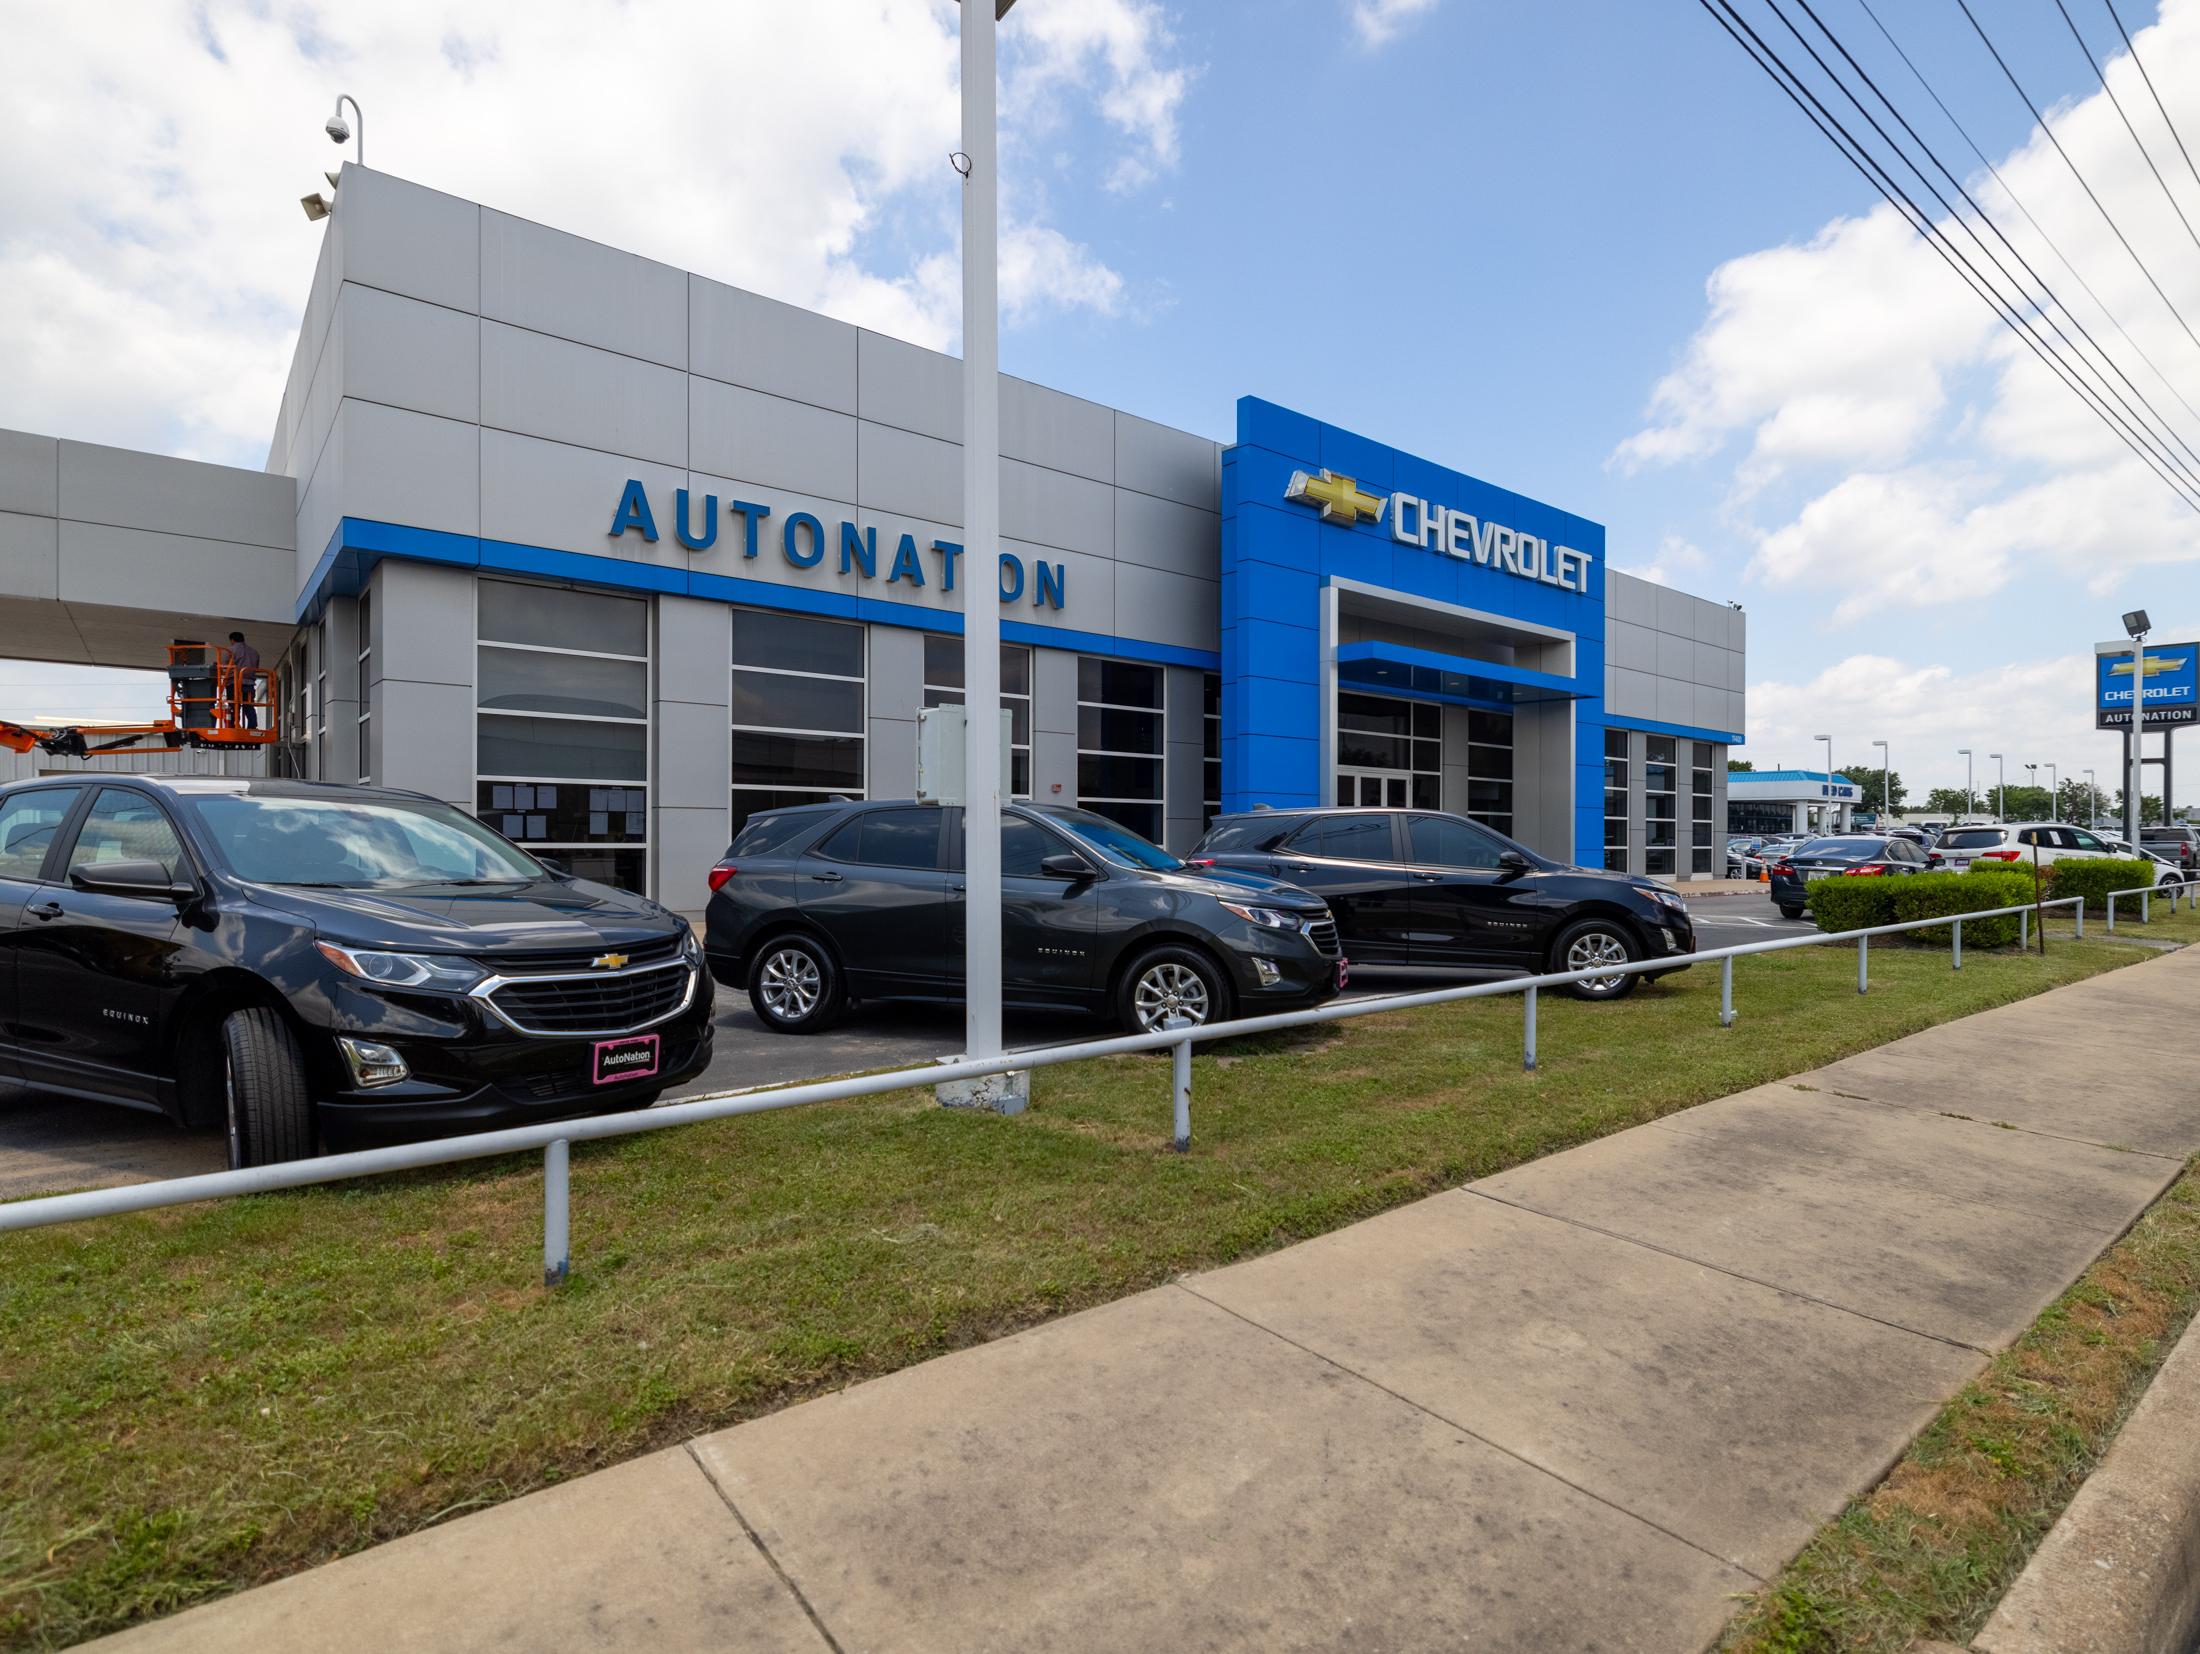 AutoNation Chevrolet West Austin Hours and Directions